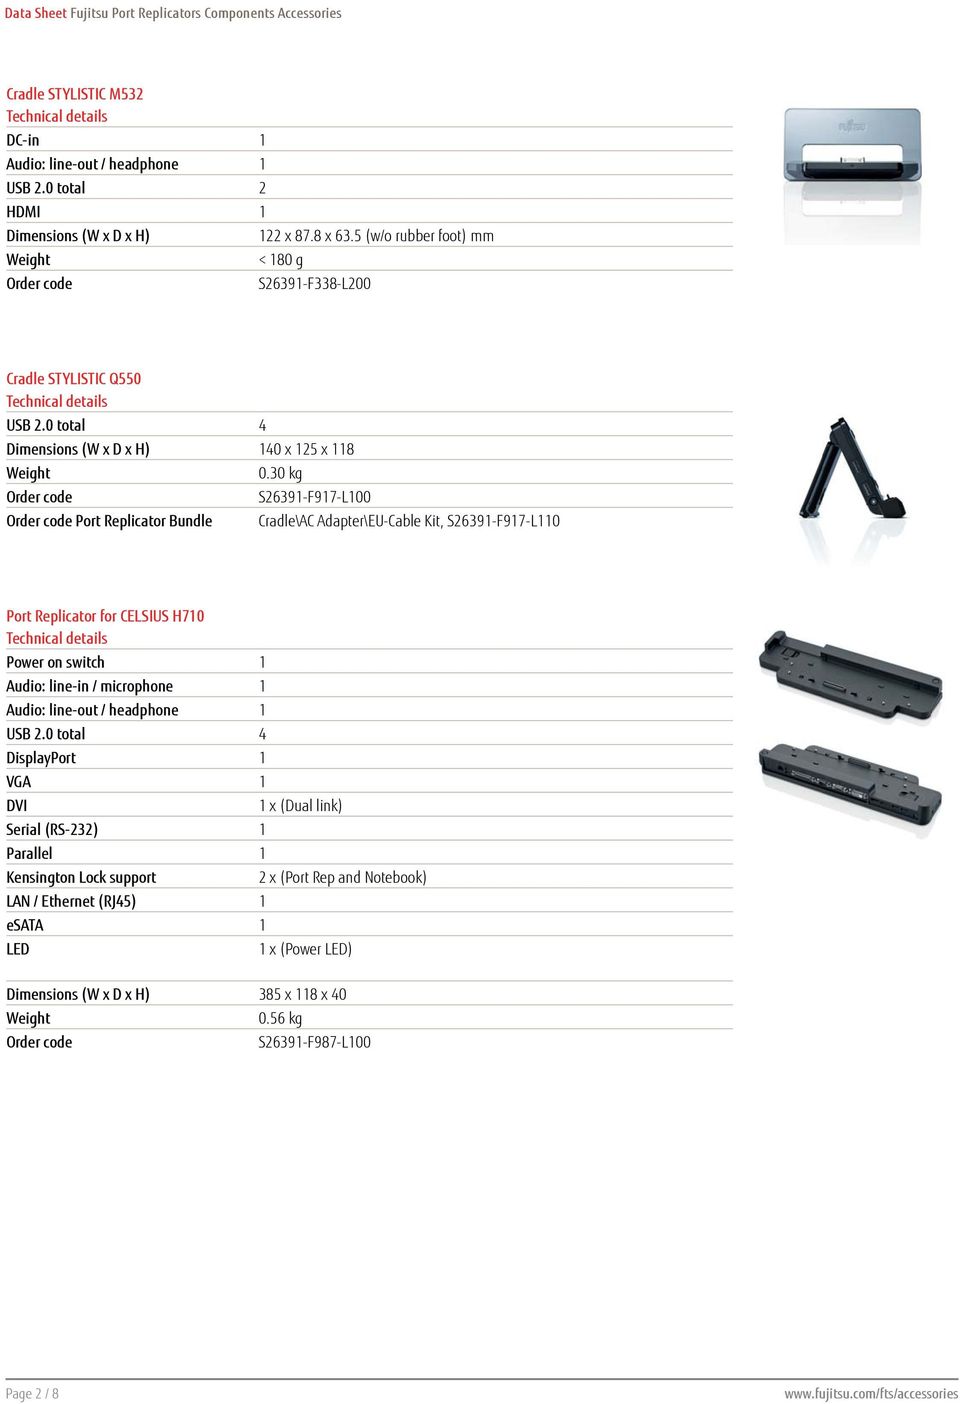 30 kg S26391-F917-L100 Port Replicator Bundle Cradle\AC Adapter\EU-Cable Kit, S26391-F917-L110 Port Replicator for CELSIUS